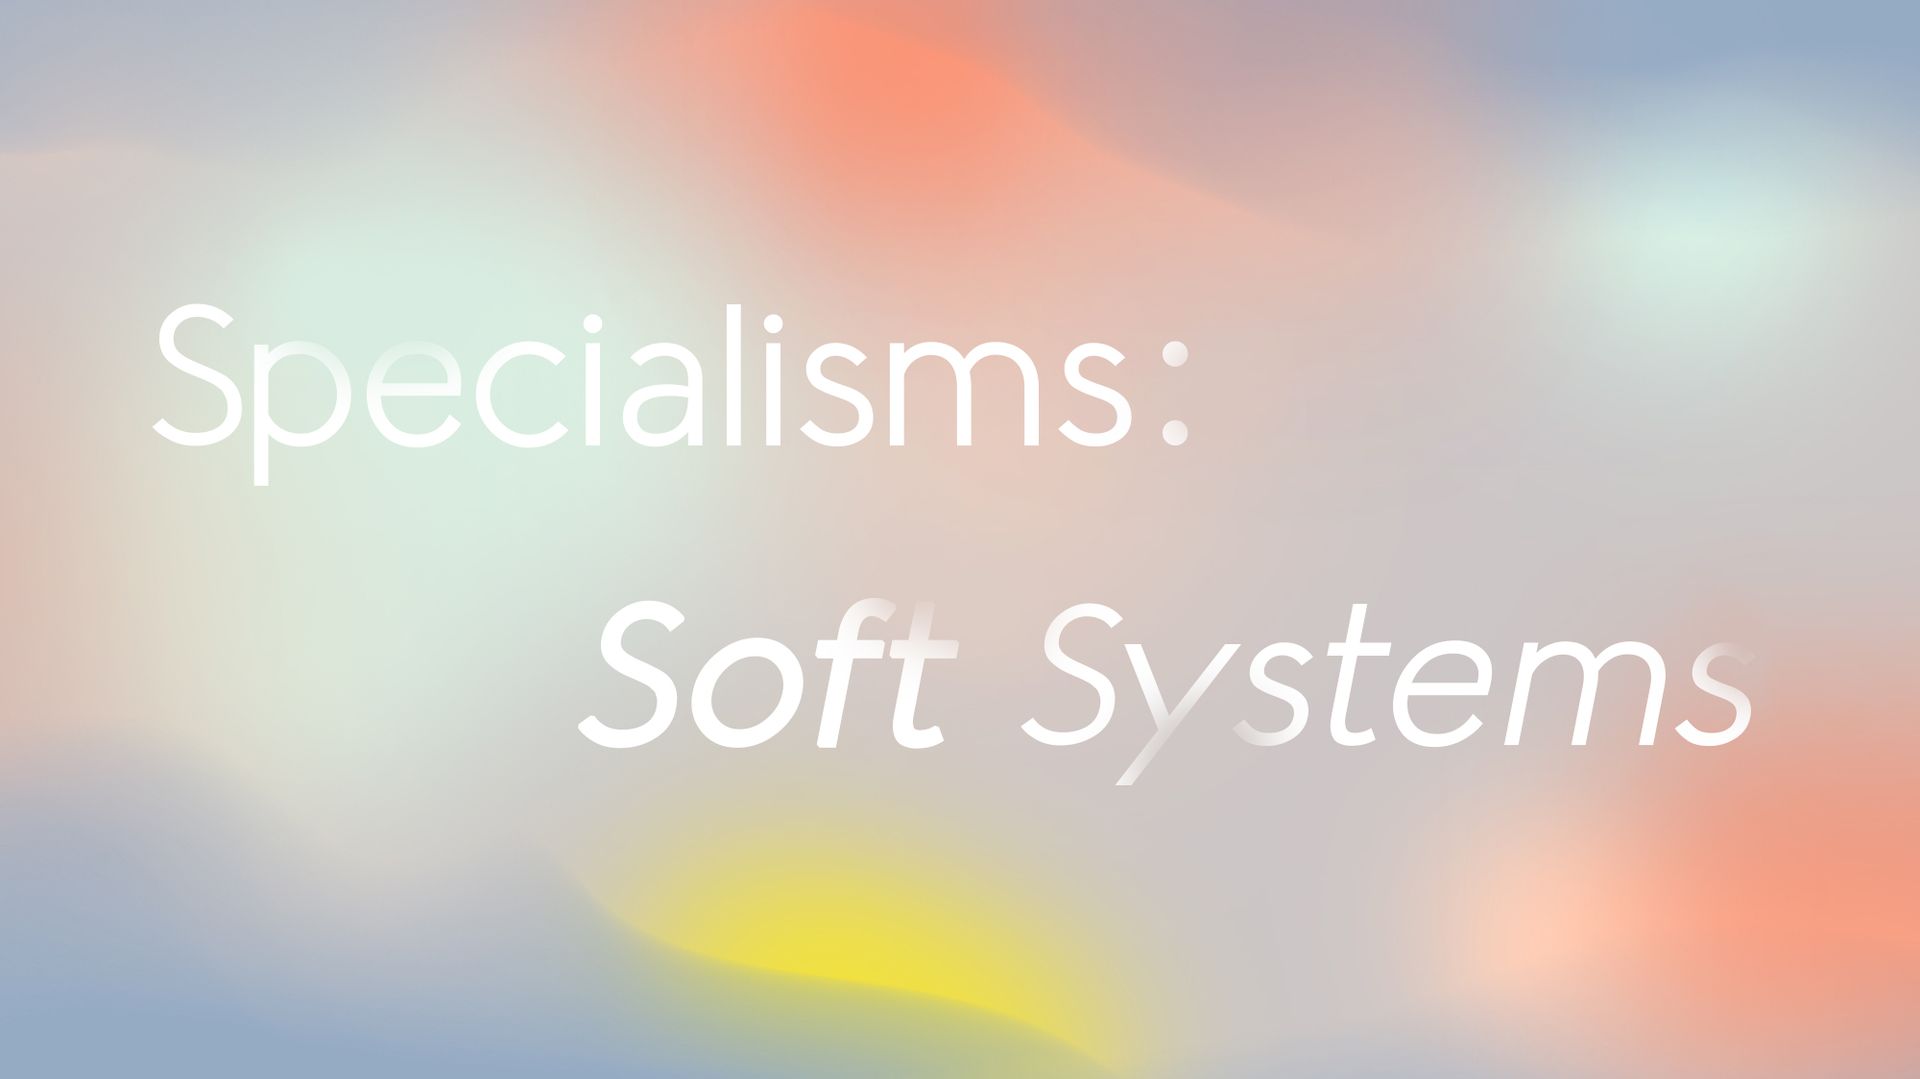 Specialisms: Soft System